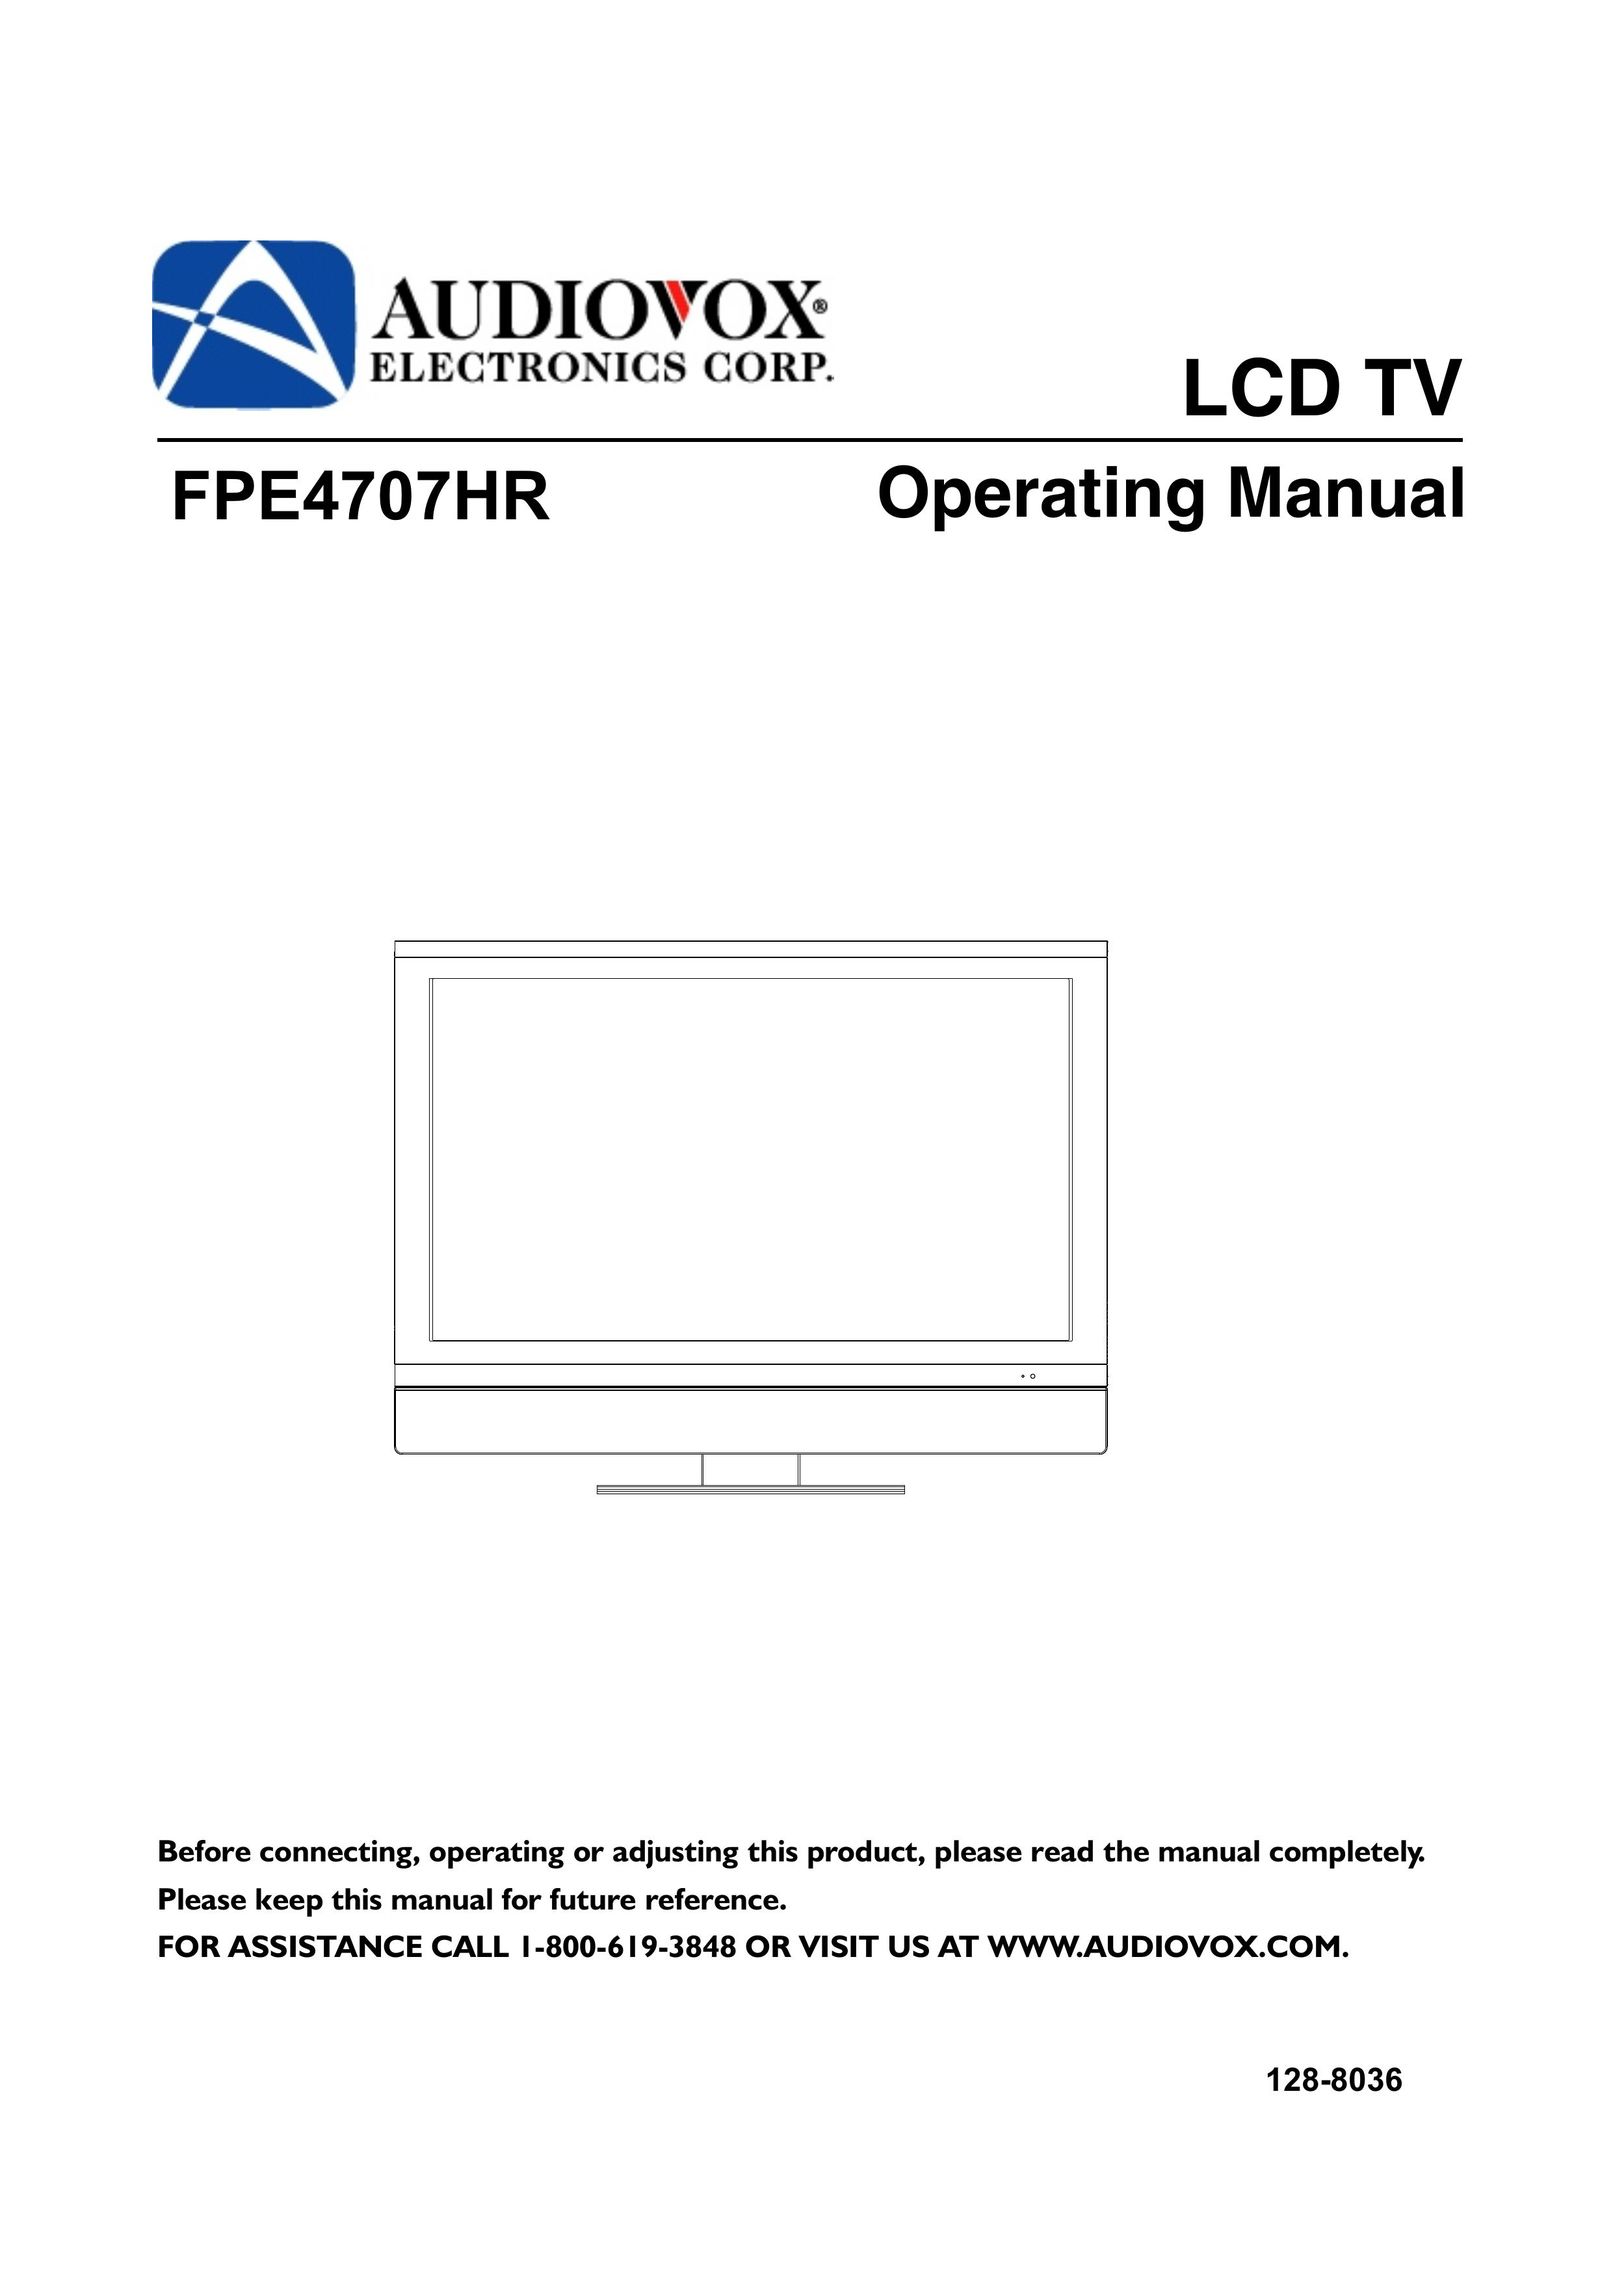 Audiovox FPE4707HR Flat Panel Television User Manual